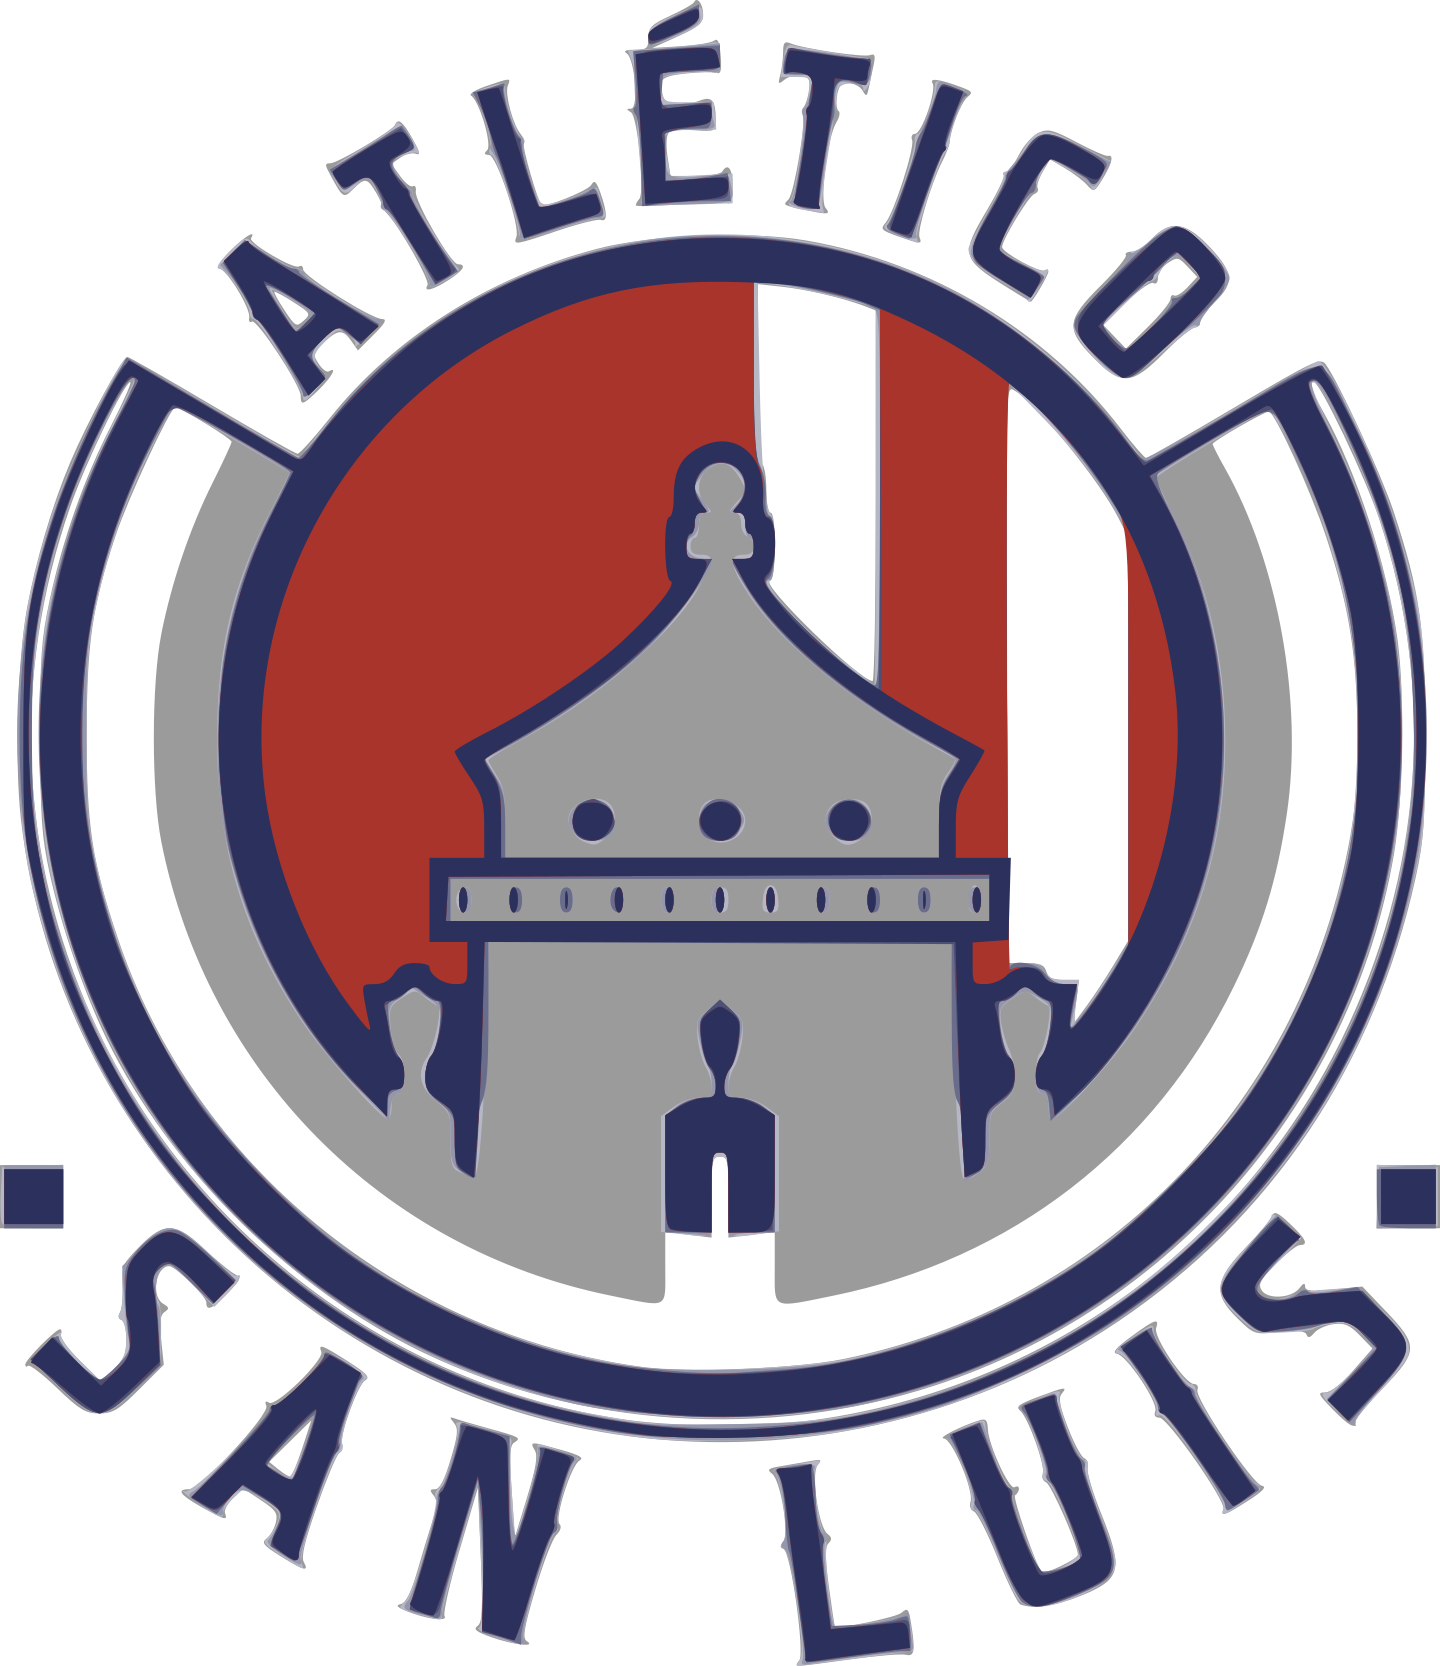 atlético san luis logo 2 1 - Atlético de San Luis Logo